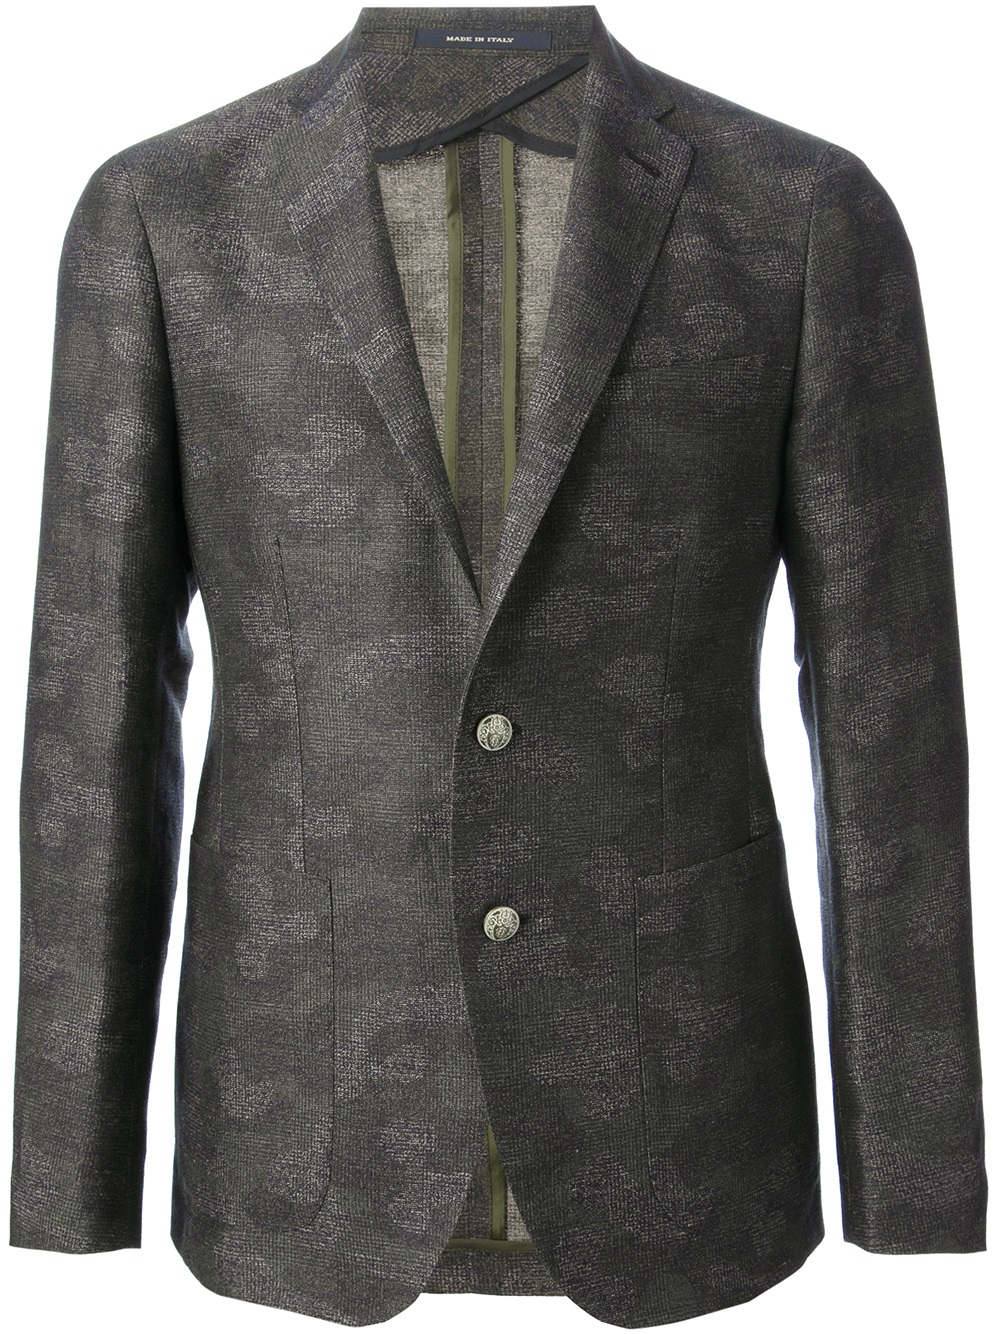 Tagliatore Camouflage Blazer in Grey (Gray) for Men - Lyst